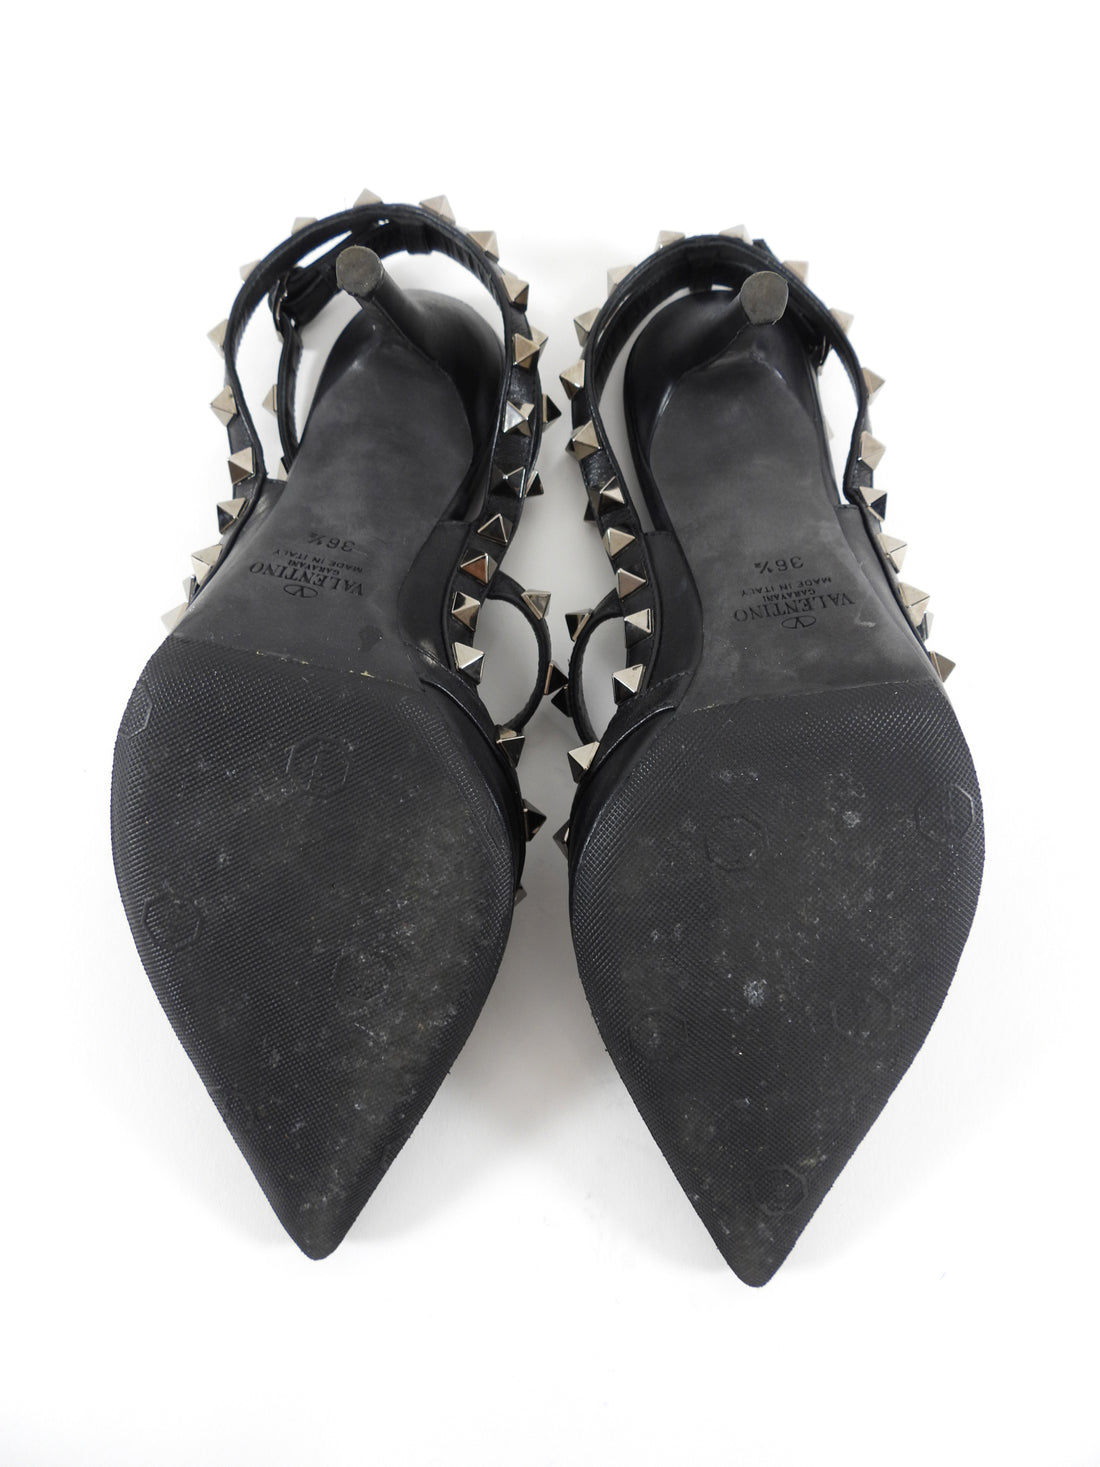 Valentino Black Rockstud Noir Caged Pointed High Heels - 36.5 / 6